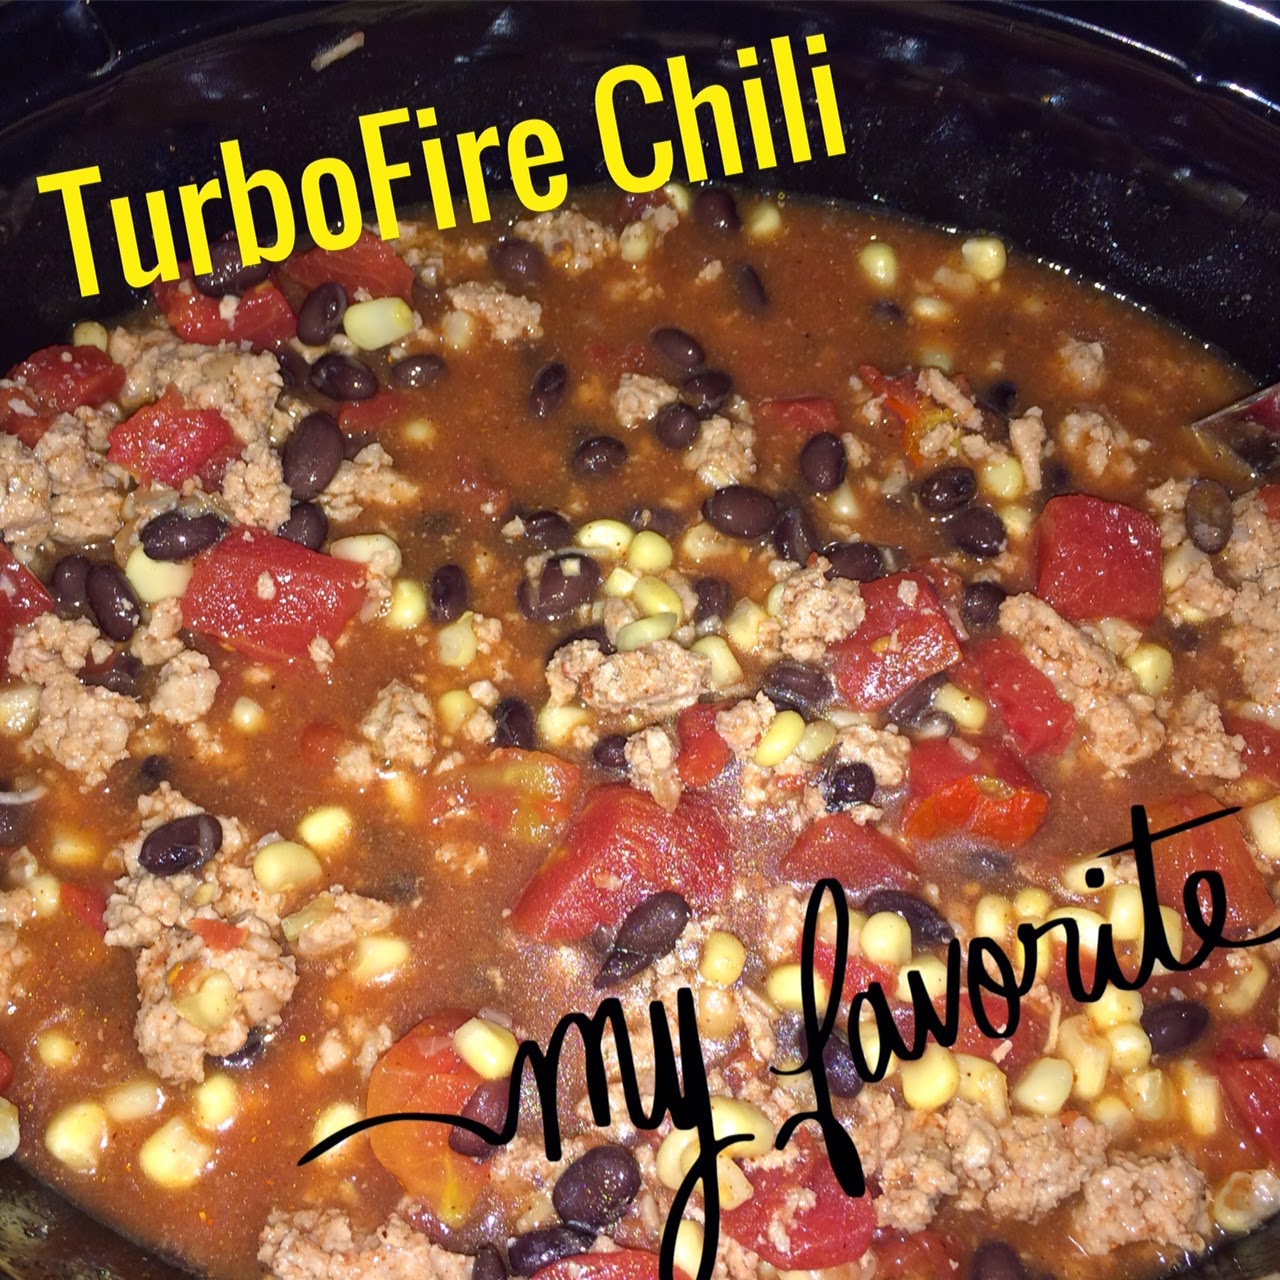 Turbo Fire Chili, Super Bowl Food